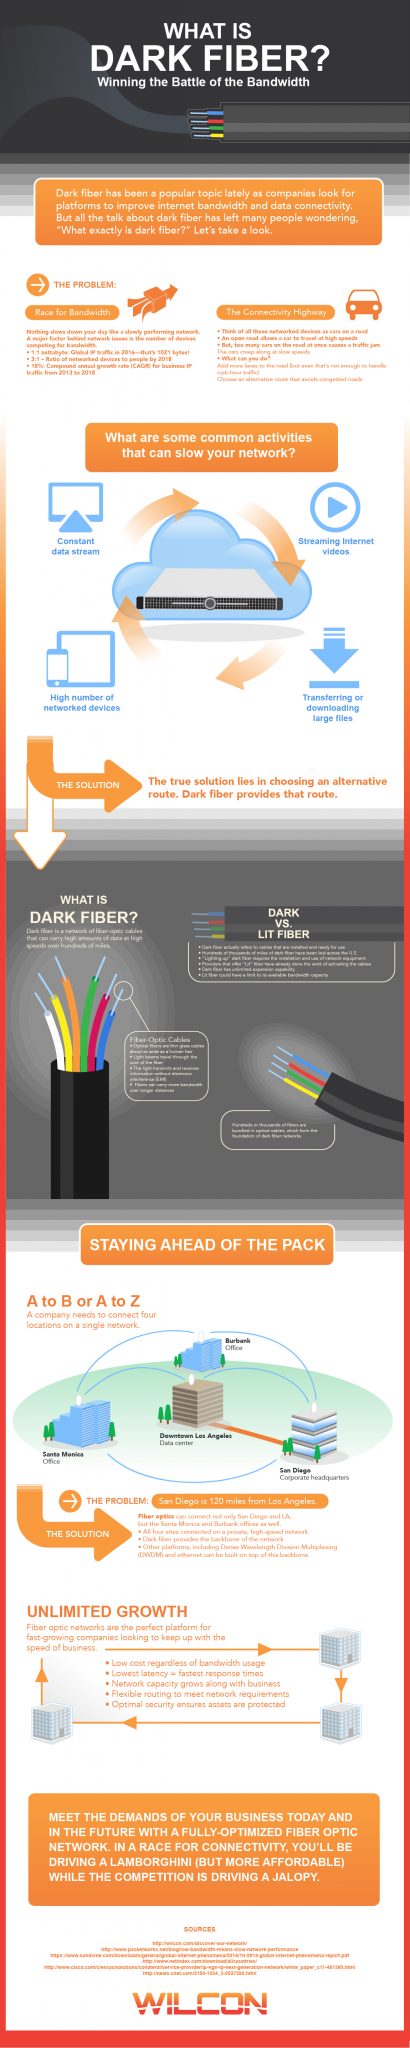 dark fiber infographic